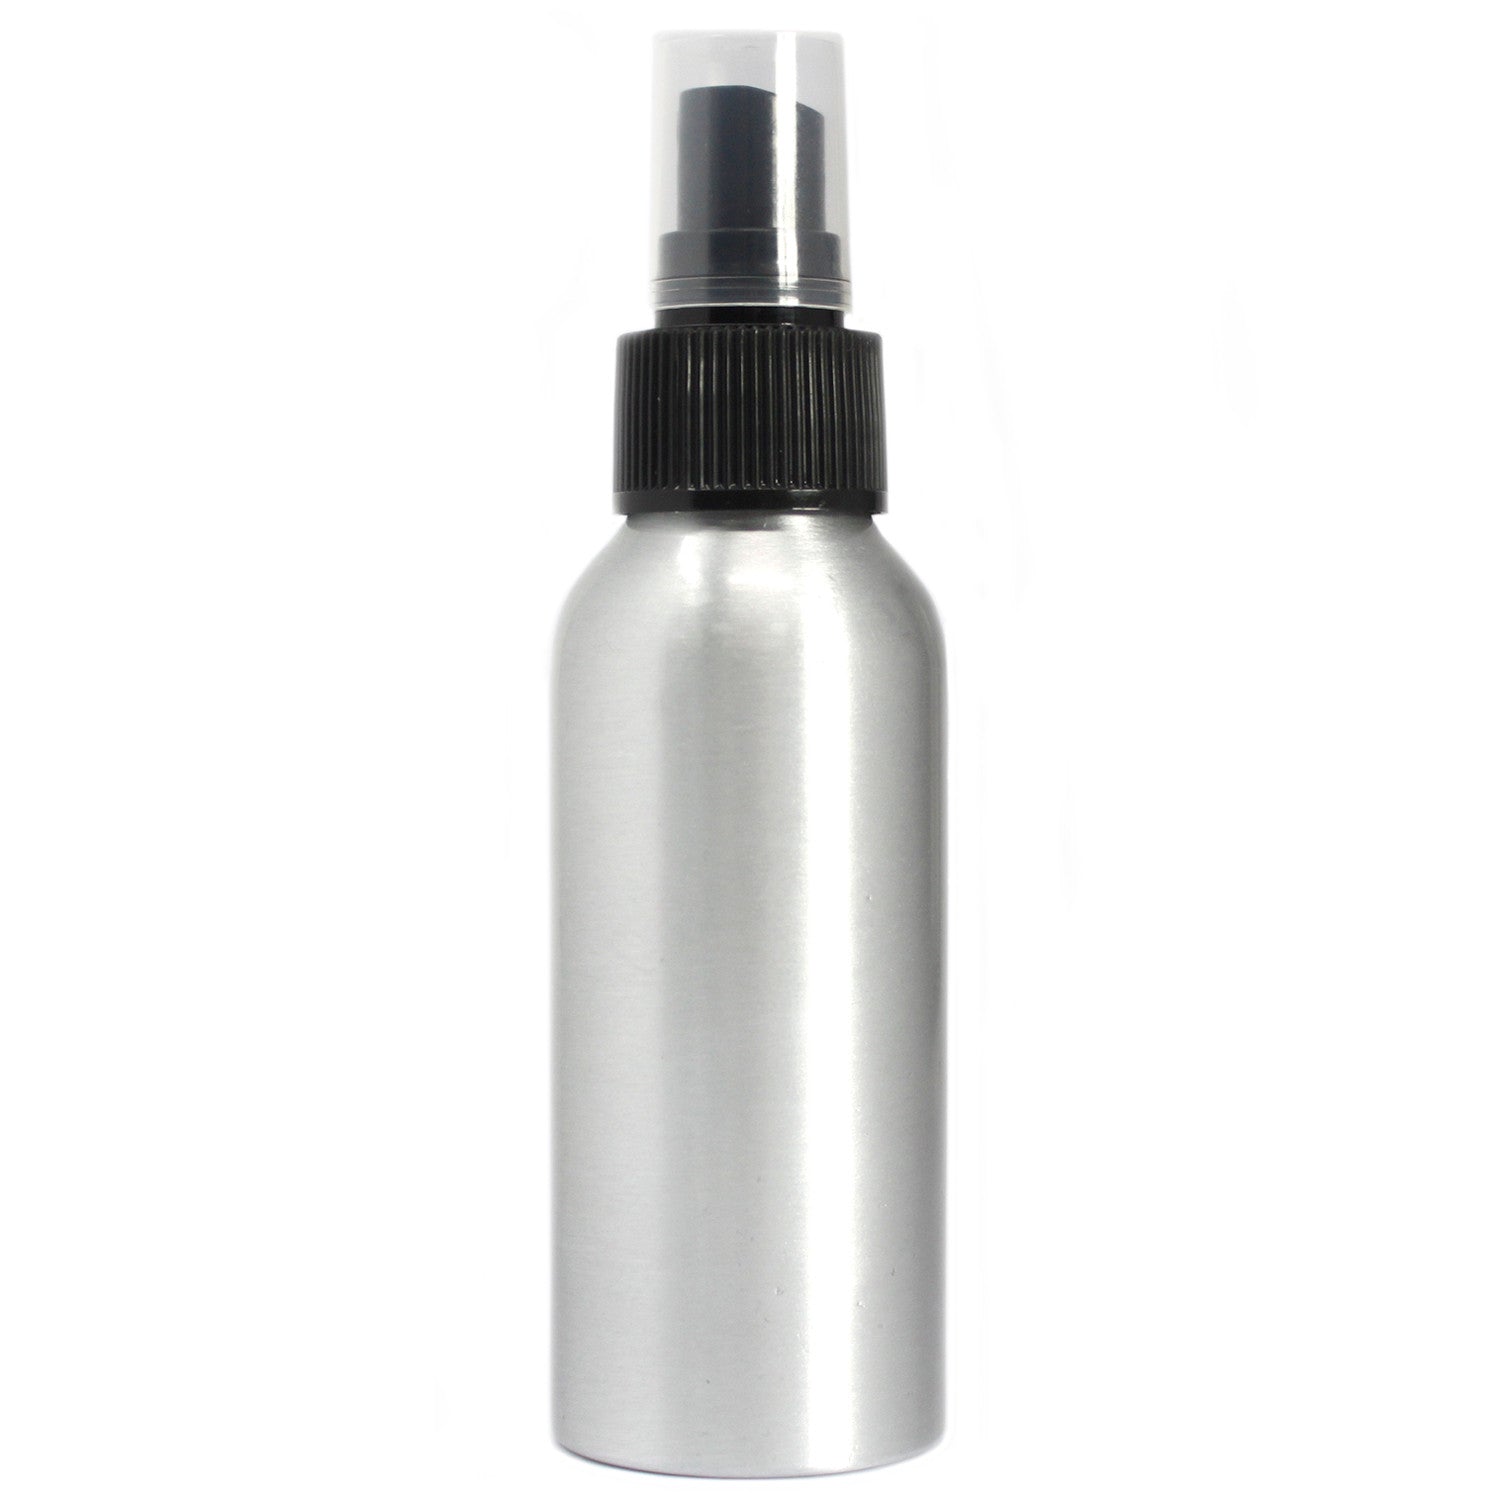 View 100ml Aluminium Bottle with Black Spray Top information